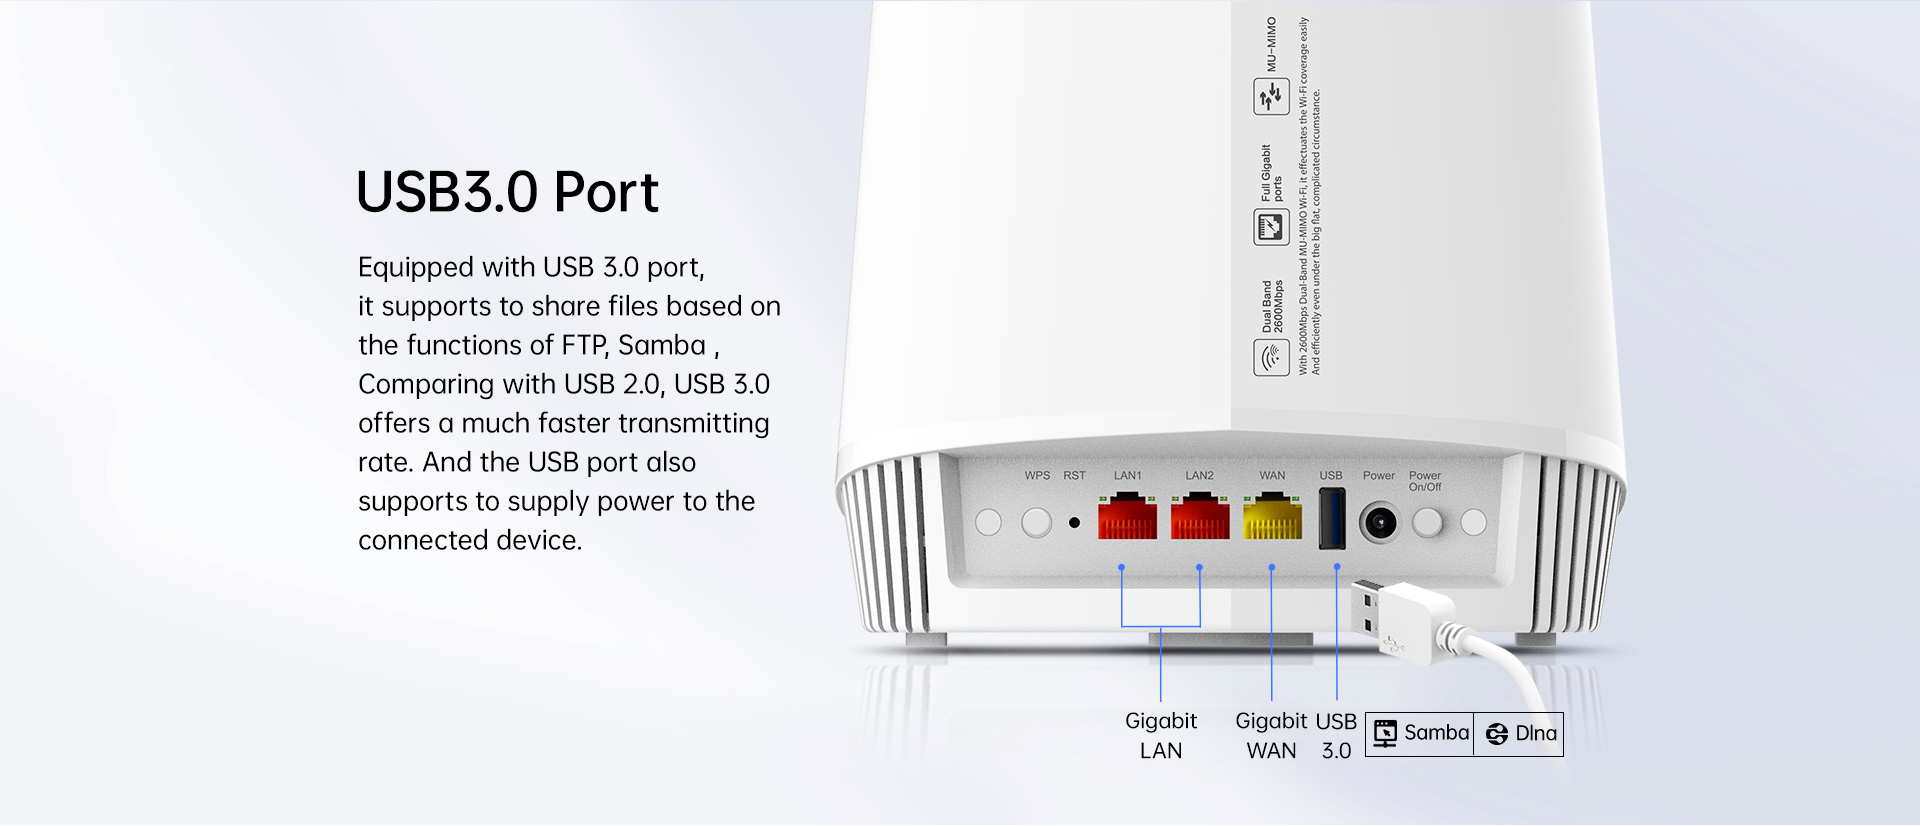 USB3.0 Port